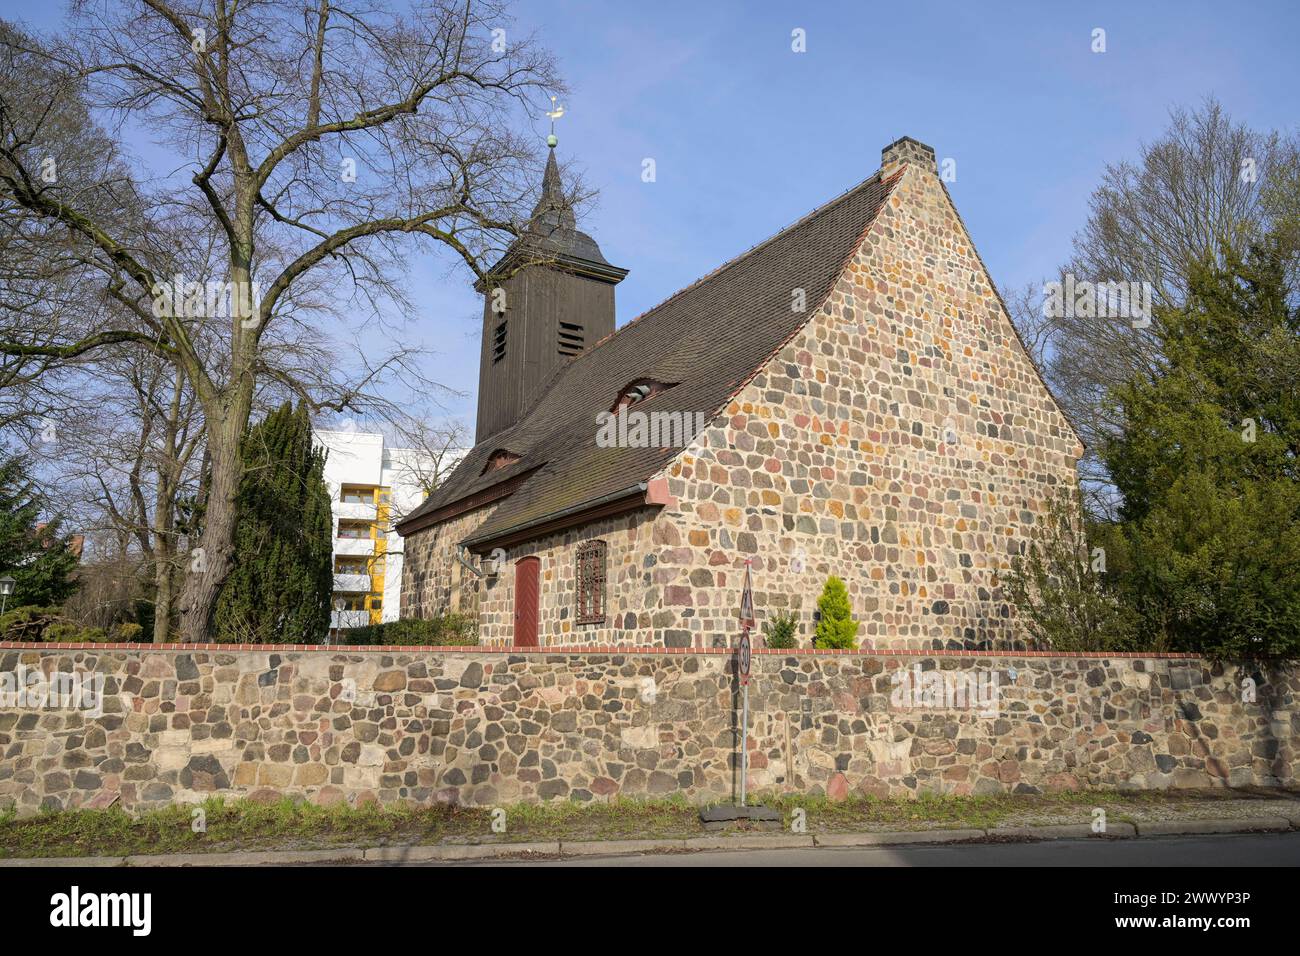 Dorfkirche, Hindenburgdamm, Lichterfelde, Berlin, Deutschland *** Village church, Hindenburgdamm, Lichterfelde, Berlin, Germany Stock Photo